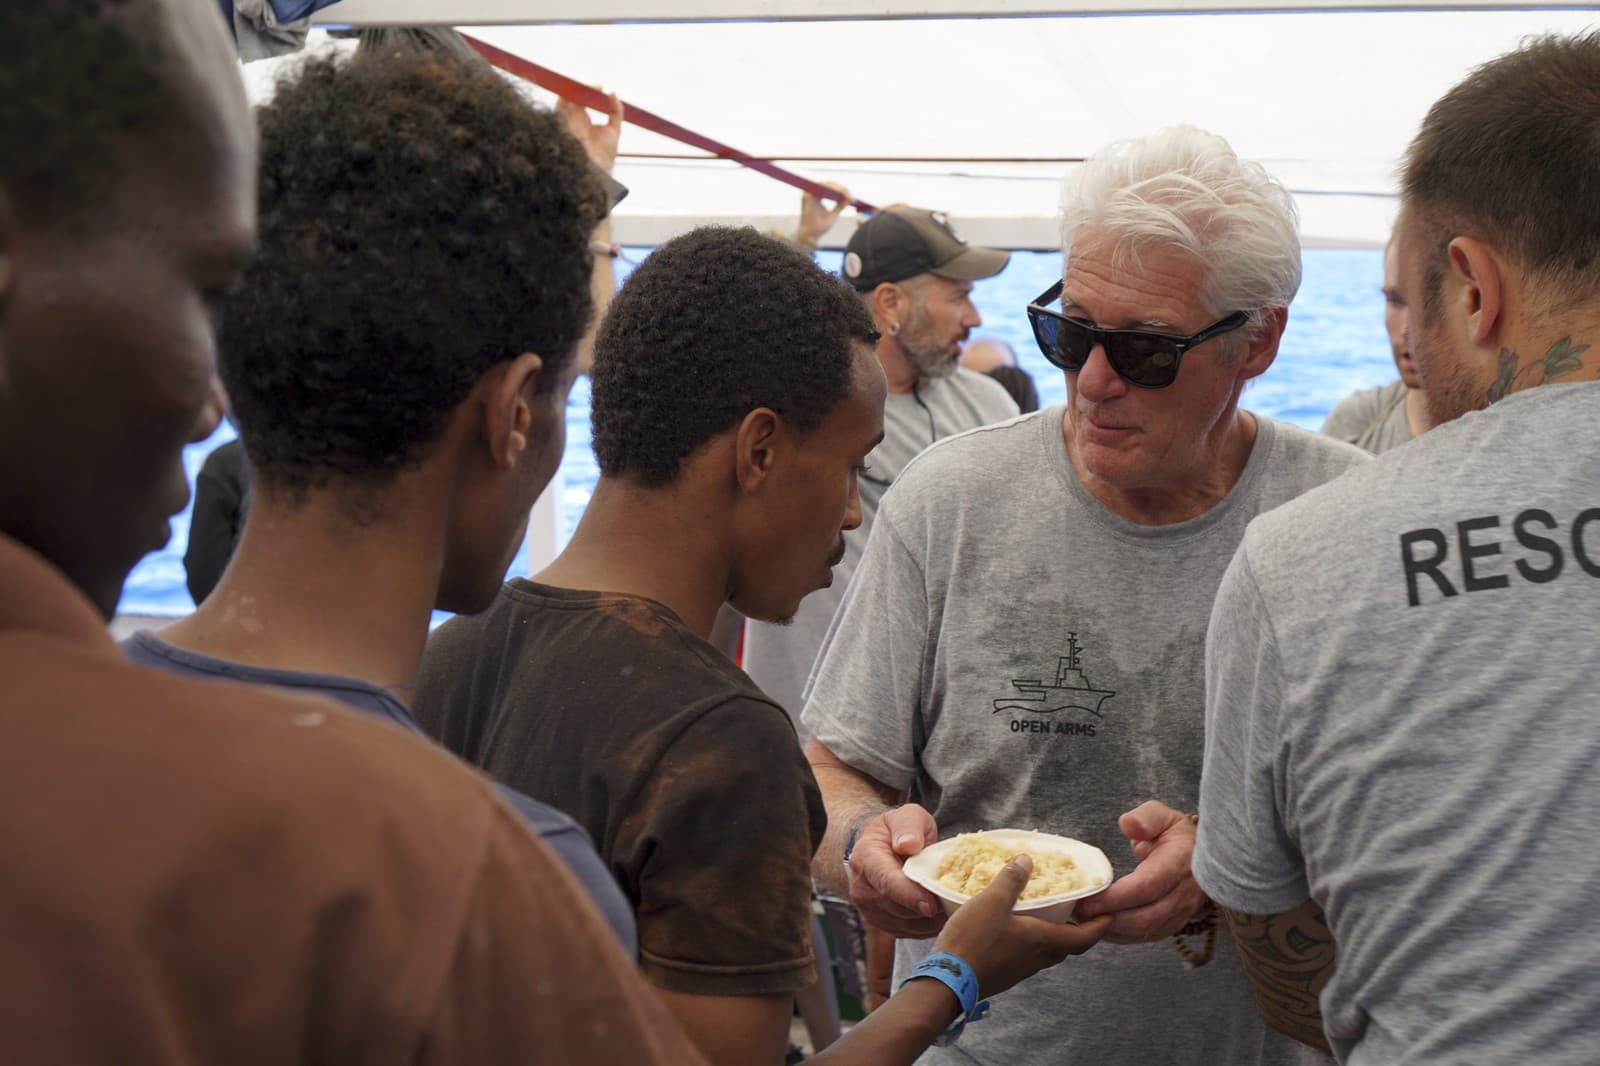 Richard Gere v roku 2019 dáva migrantom jedlo (Zdroj: TASR/AP Photo/Valerio Nicolosi)